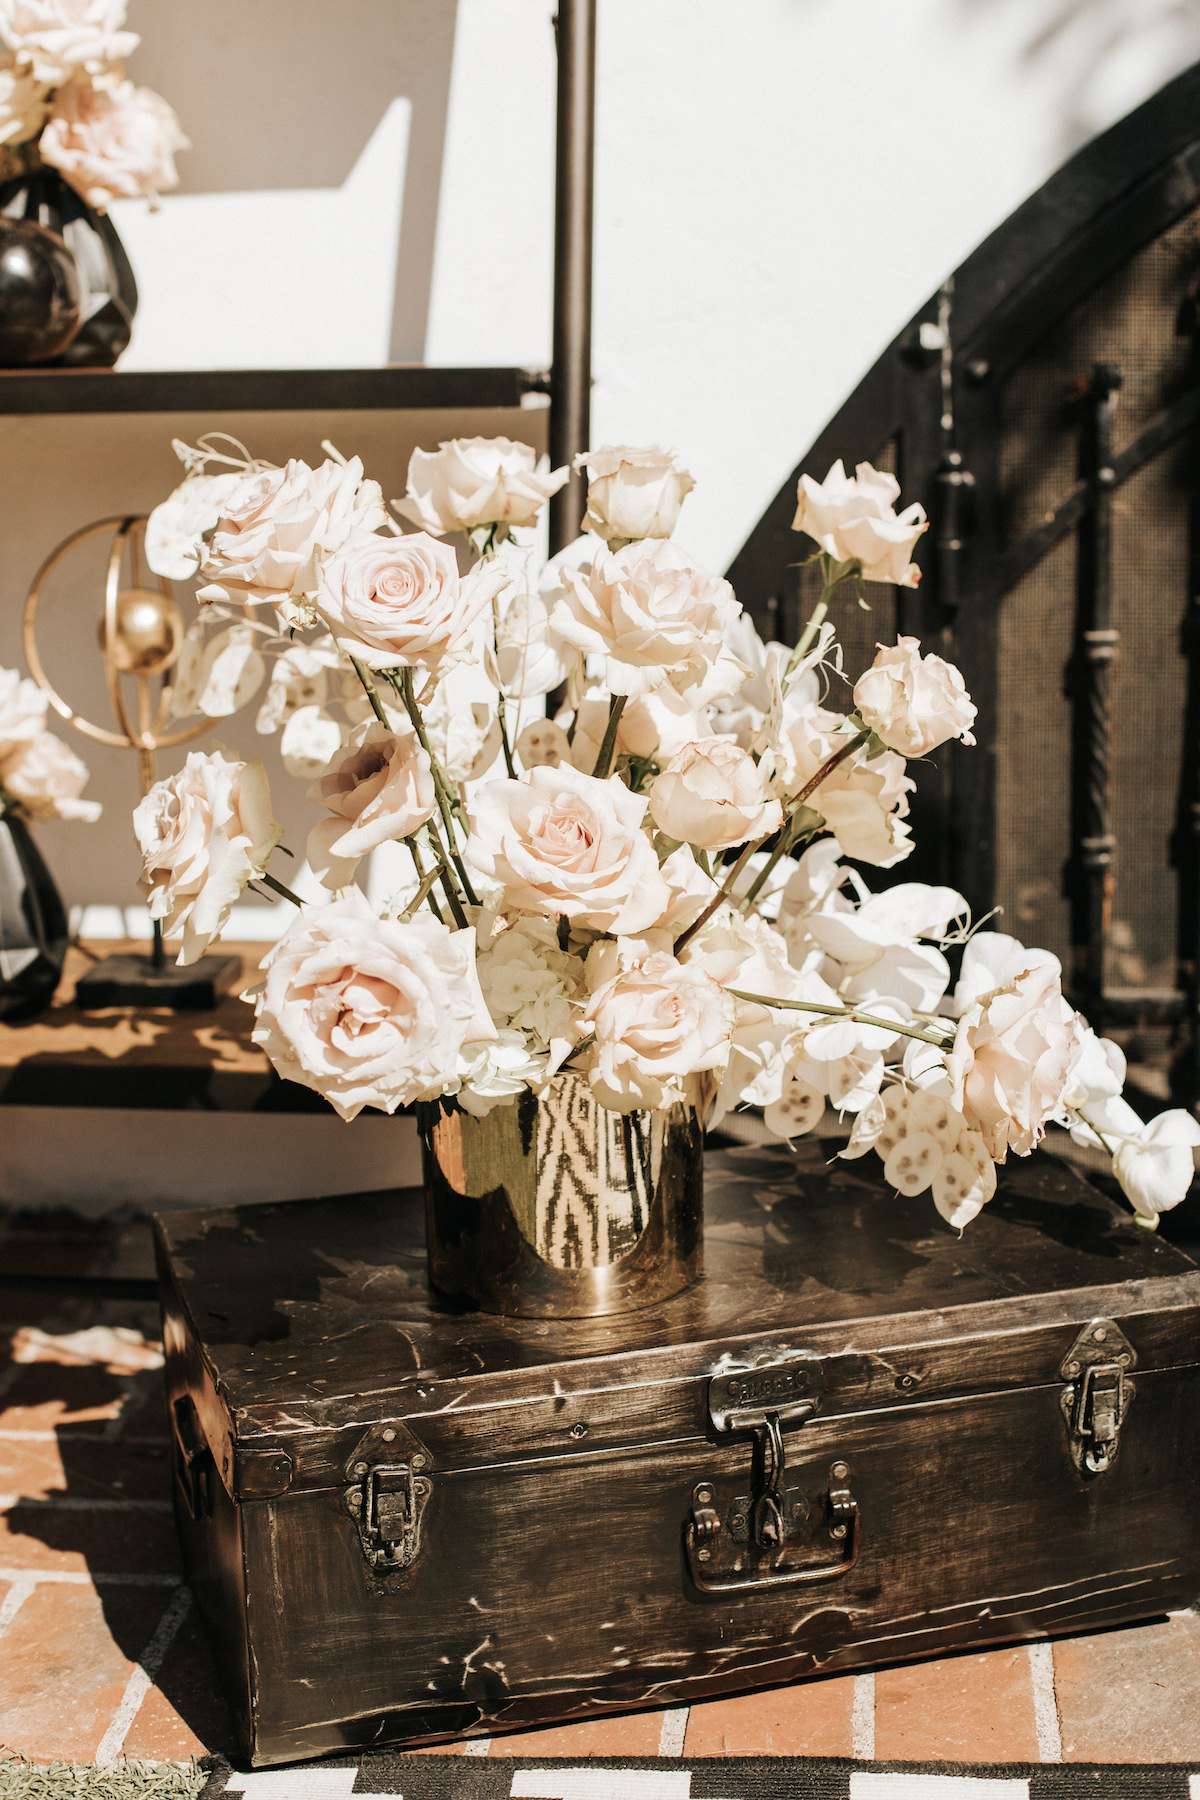 Blush rustic wedding flowers - Sydney Bliss Photography